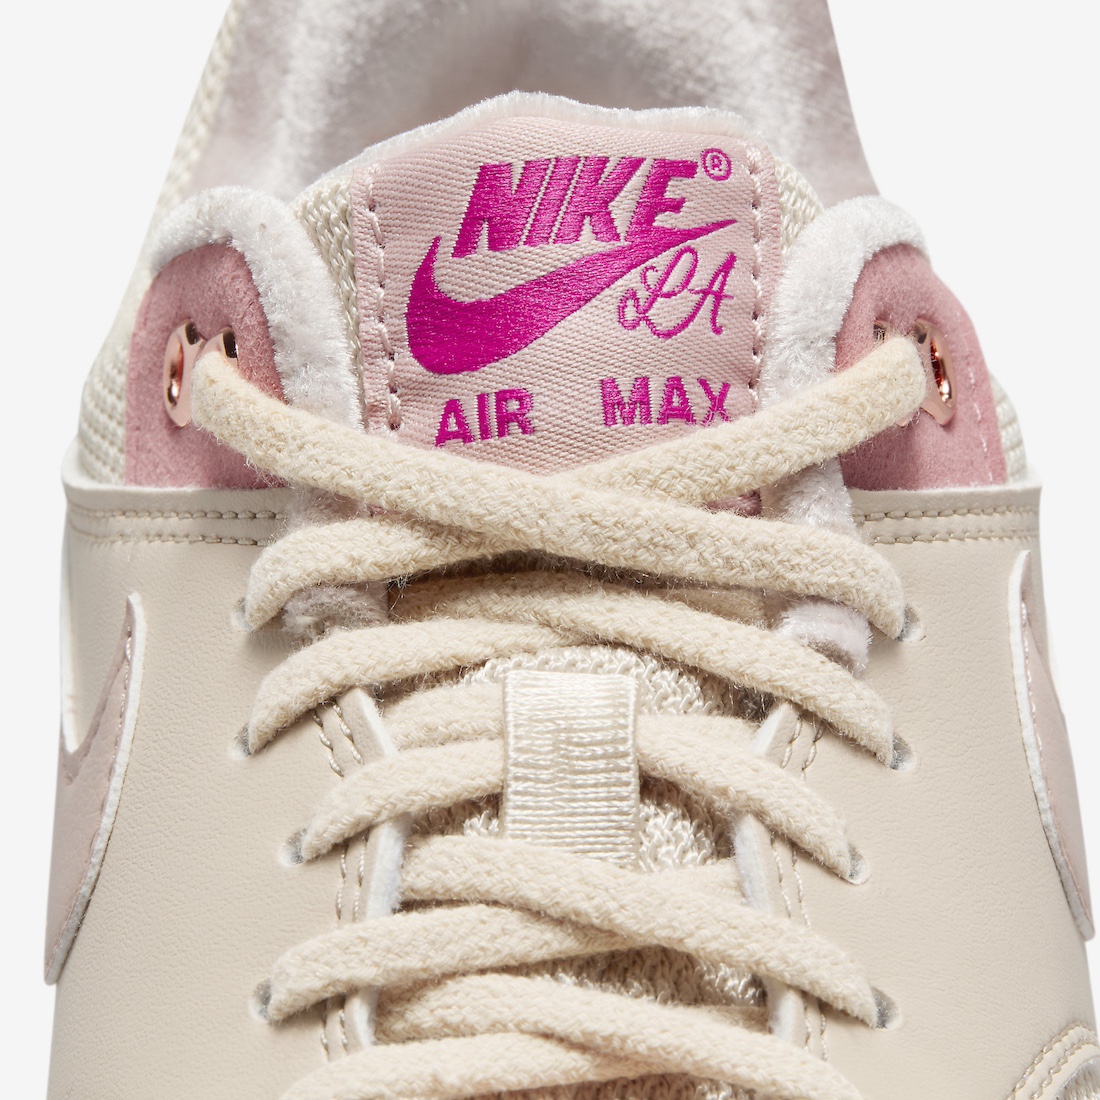 Serena-Williams-Design-Crew-x-Nike-Air-Max-1-Los-Angeles-FN6941-200-9.jpg